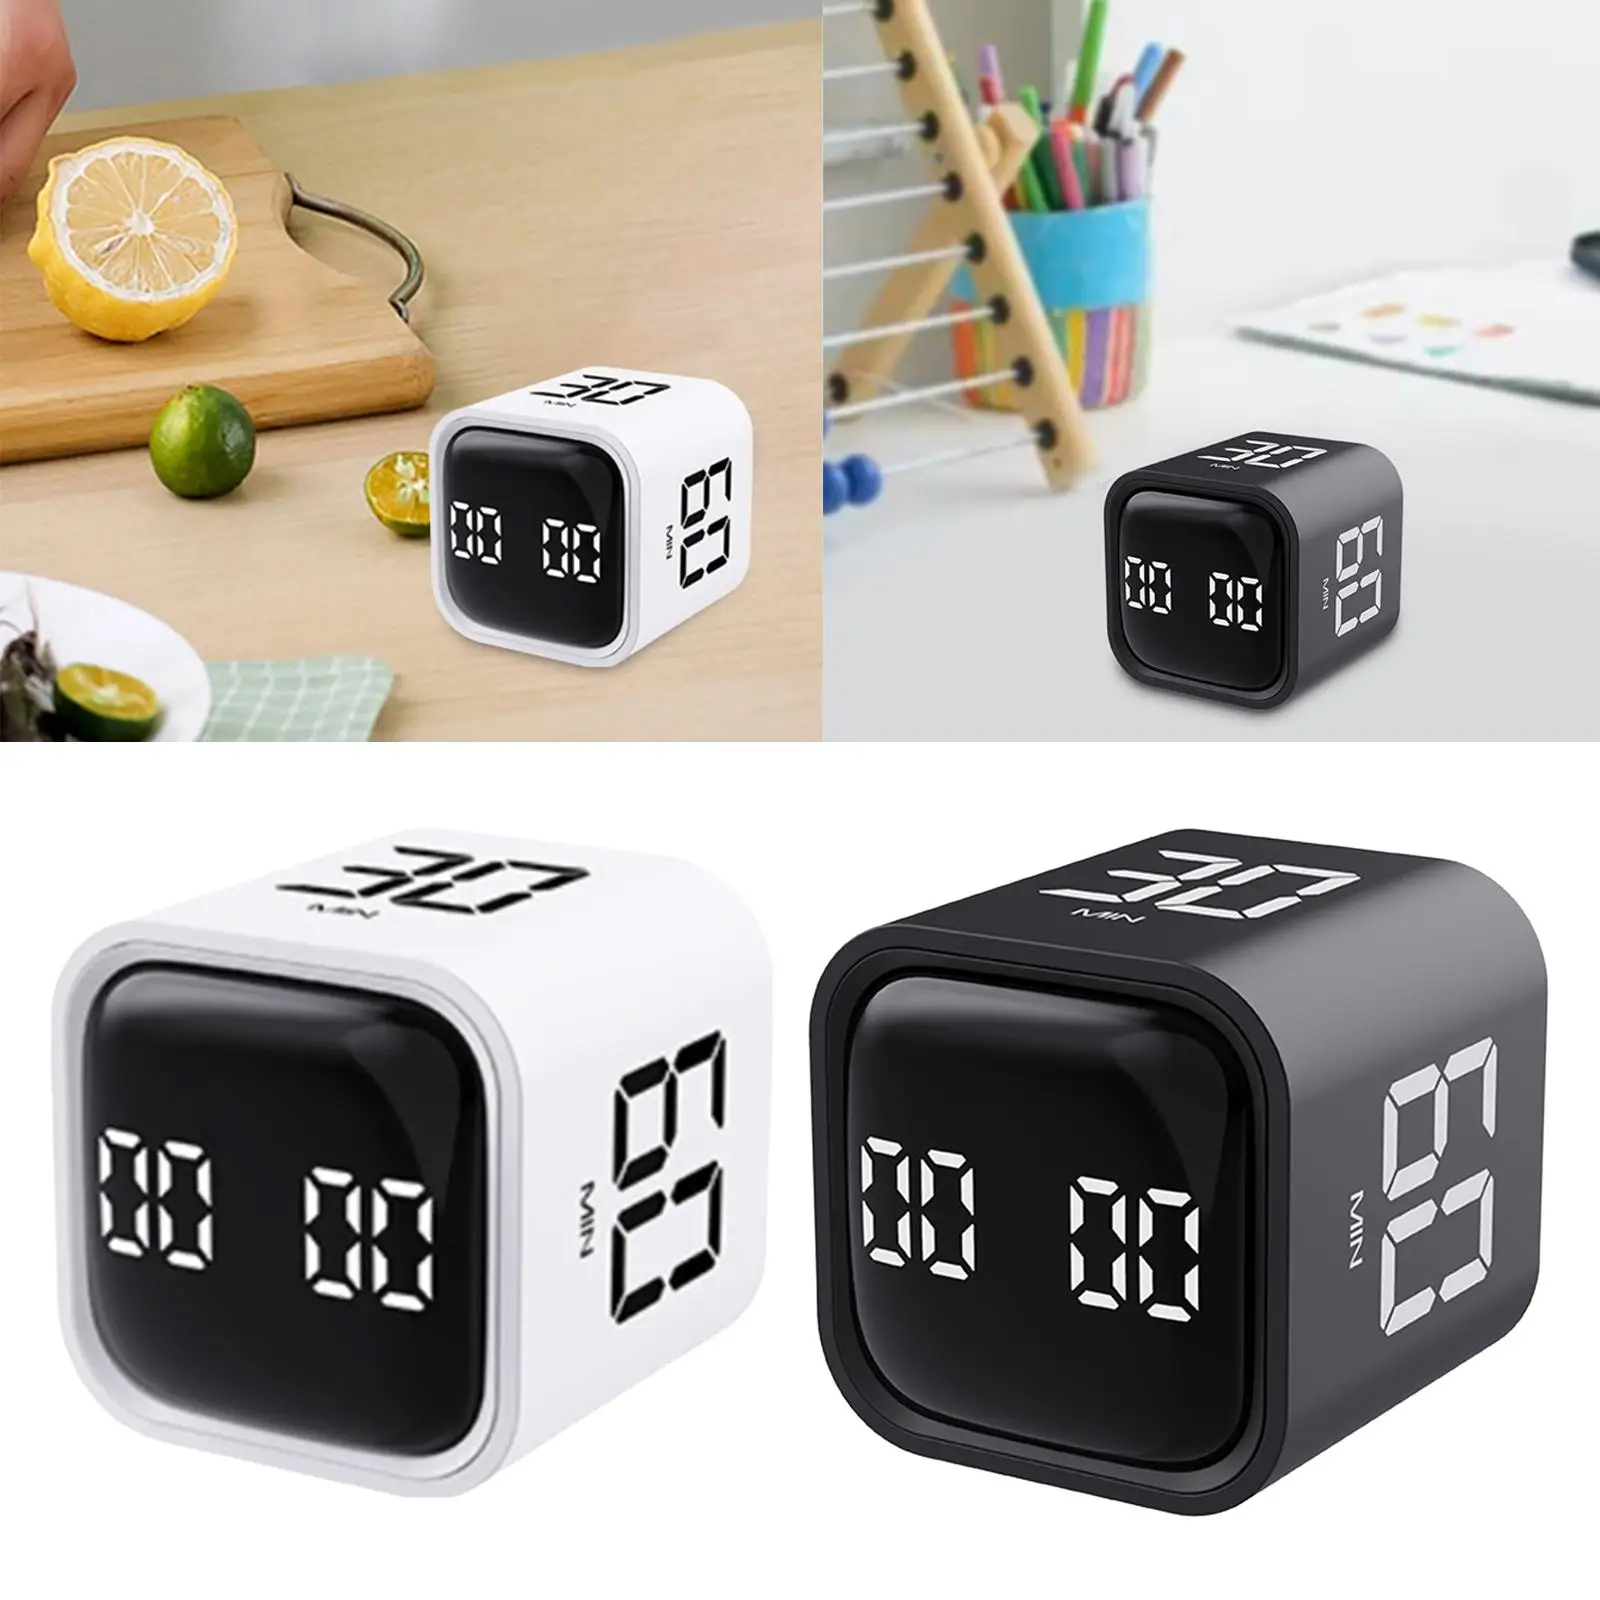 Cube timers Gravity Sensor Setting Management Flip Timer Game Timer for Exercise Cooking Baking Office